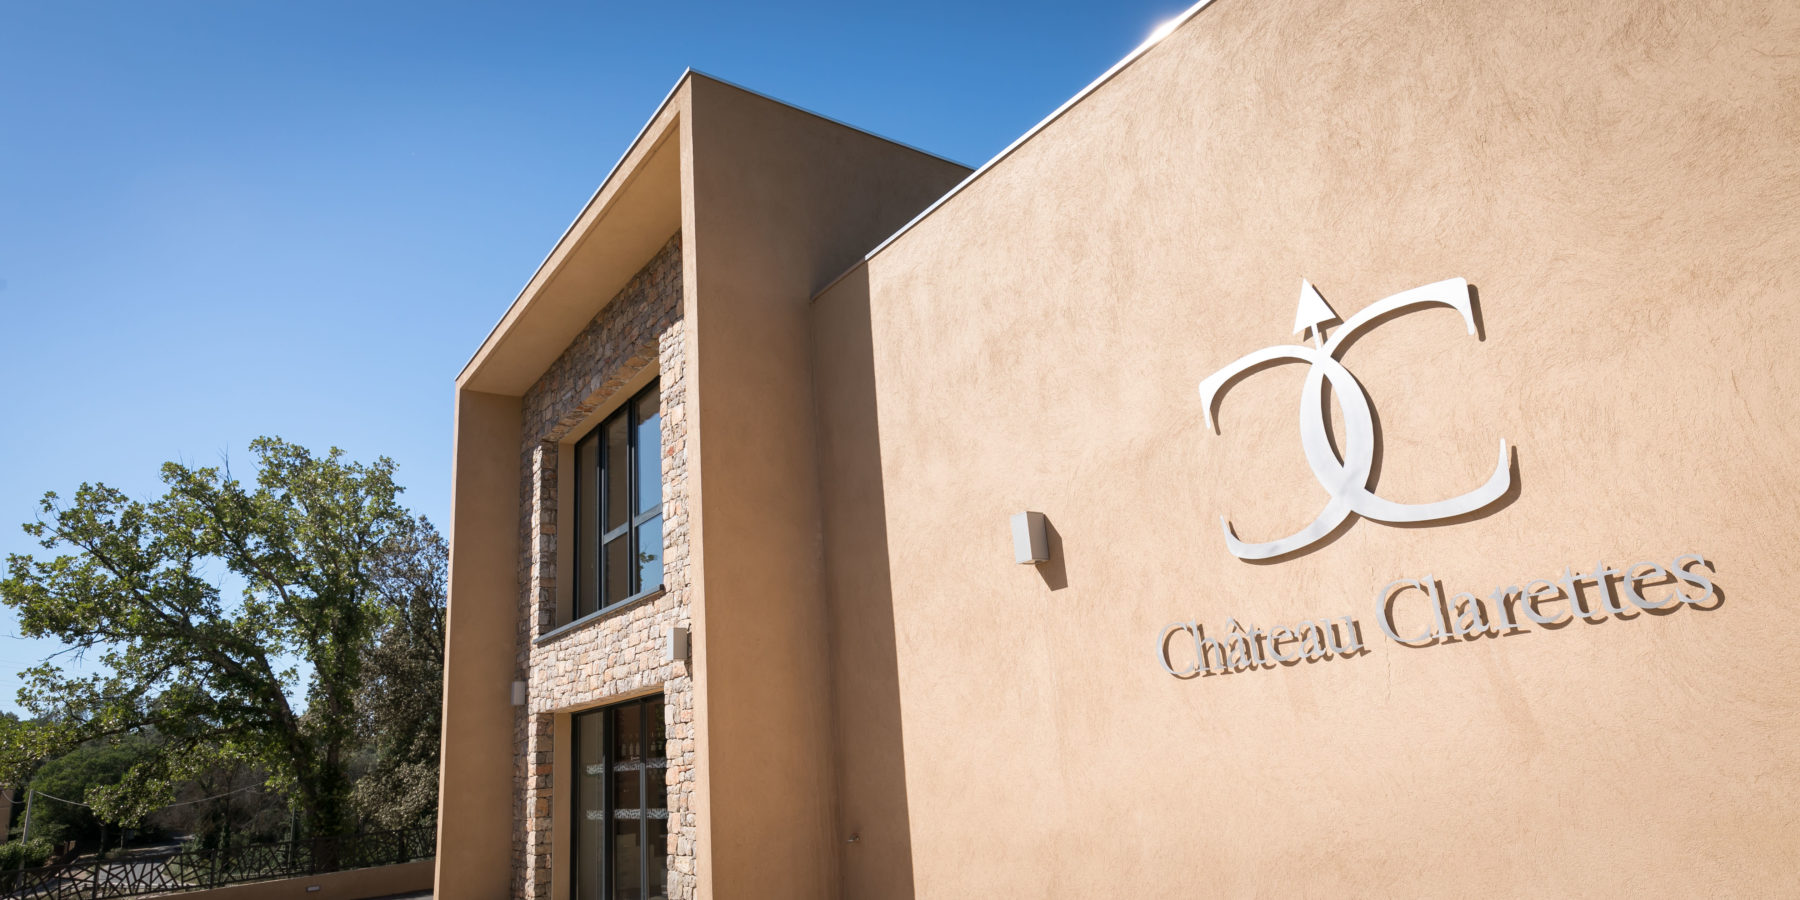 Chateau-Clarettes-001-1800x900